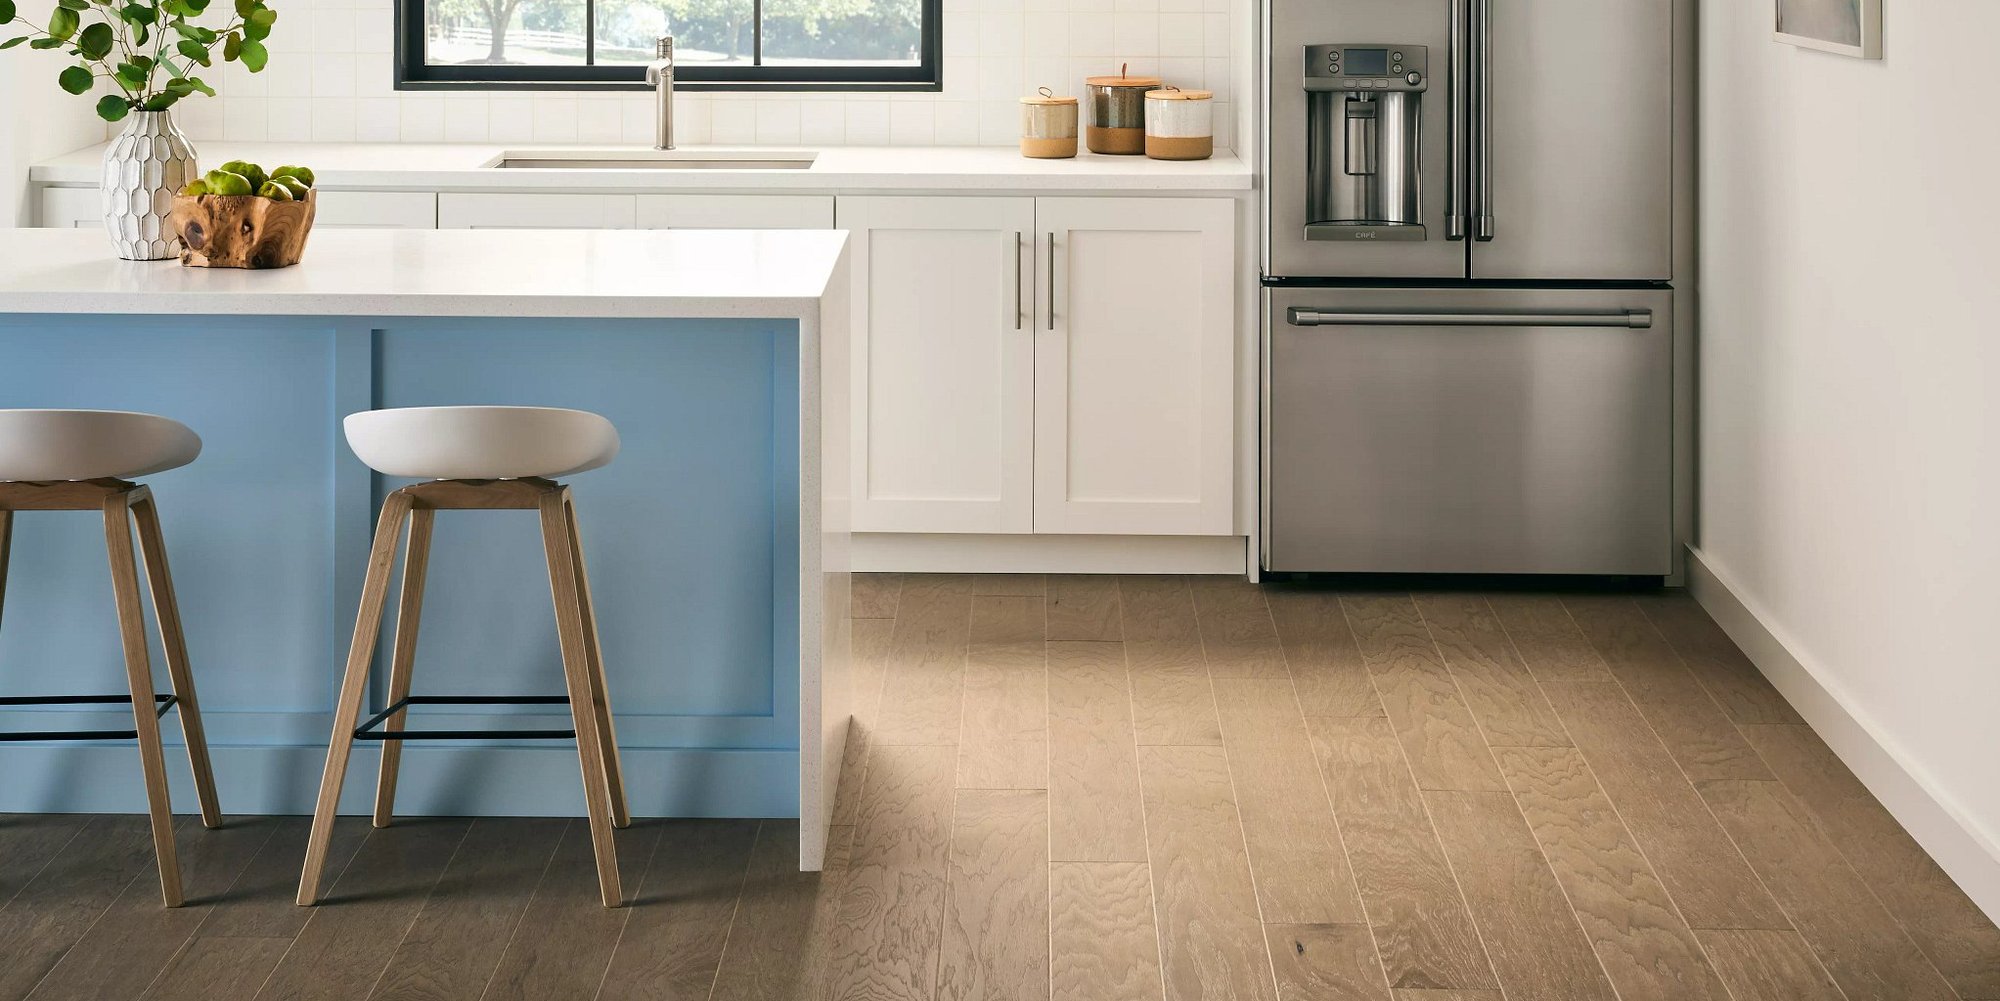 hardwood floor kitchen - Whitley Flooring and Design in AR